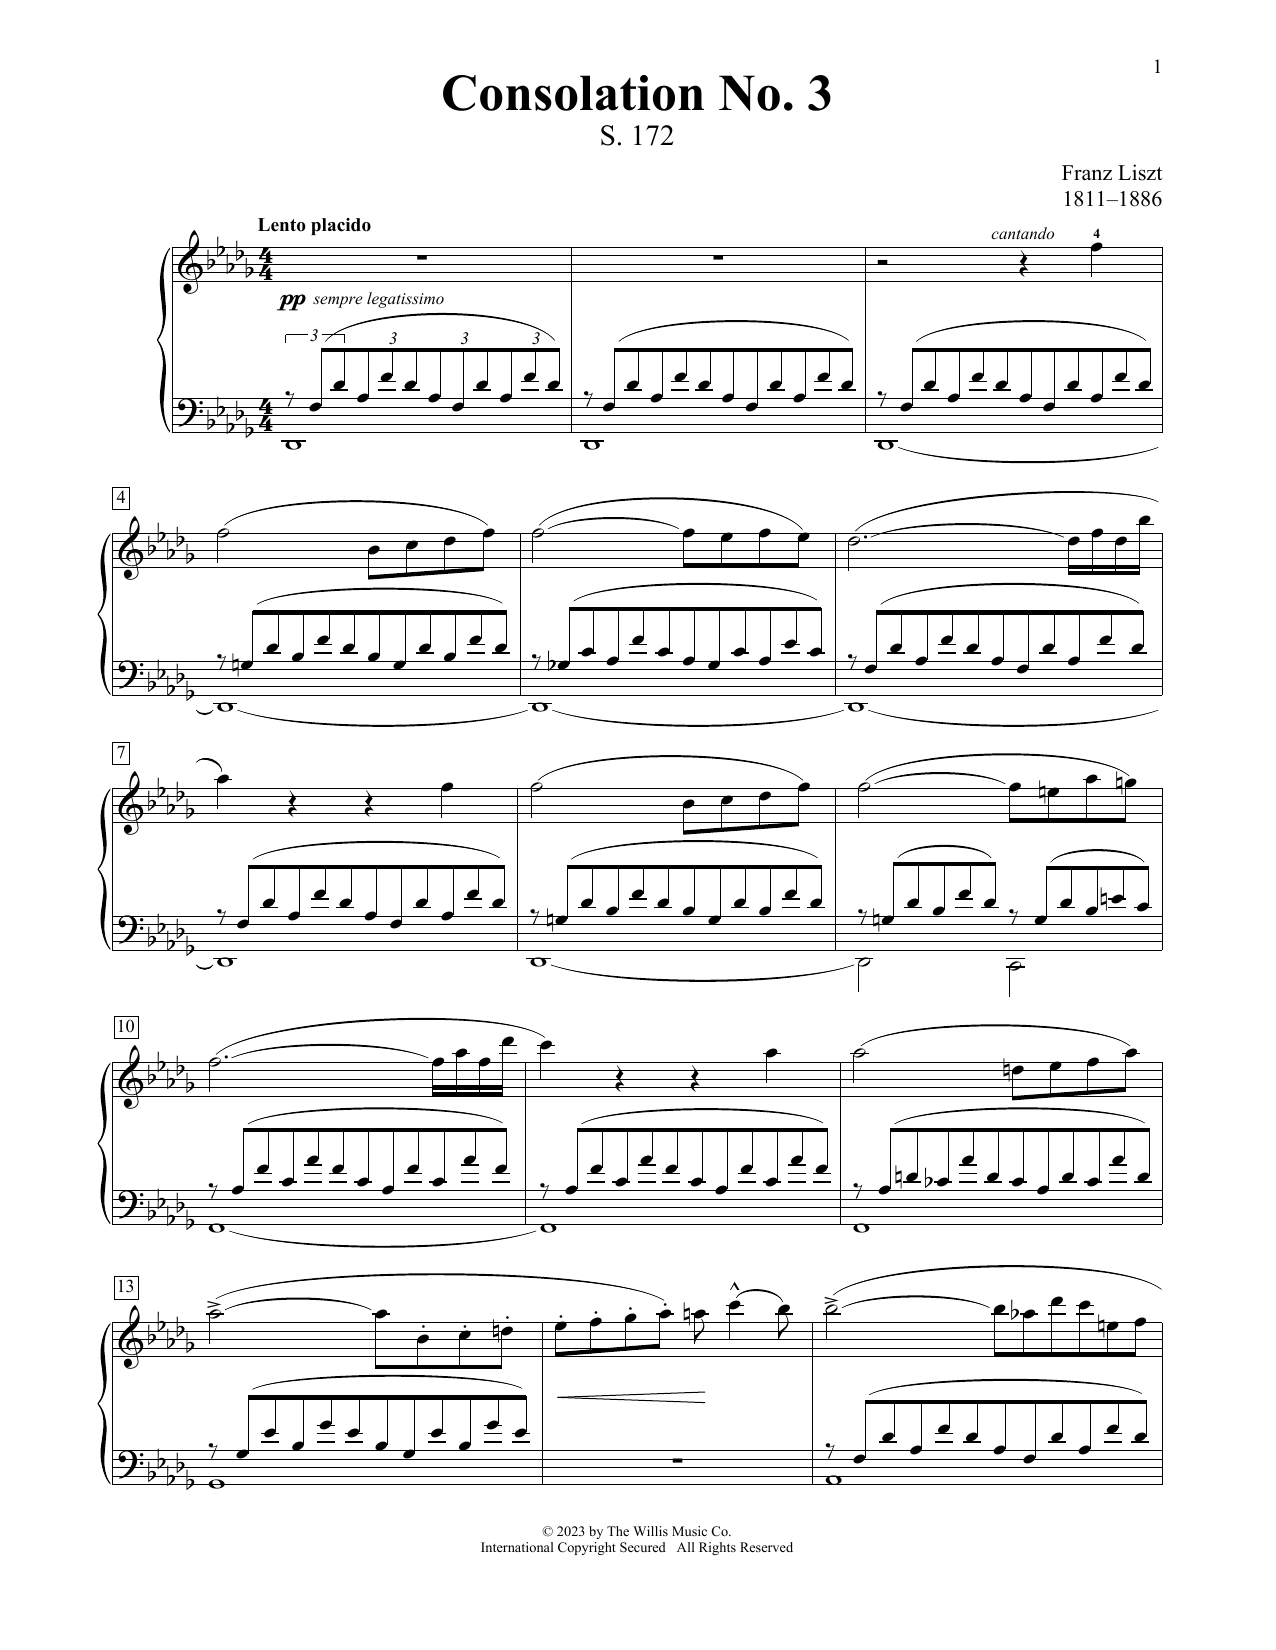 Franz Liszt Consolation No. 3 In D-Flat Major sheet music notes printable PDF score